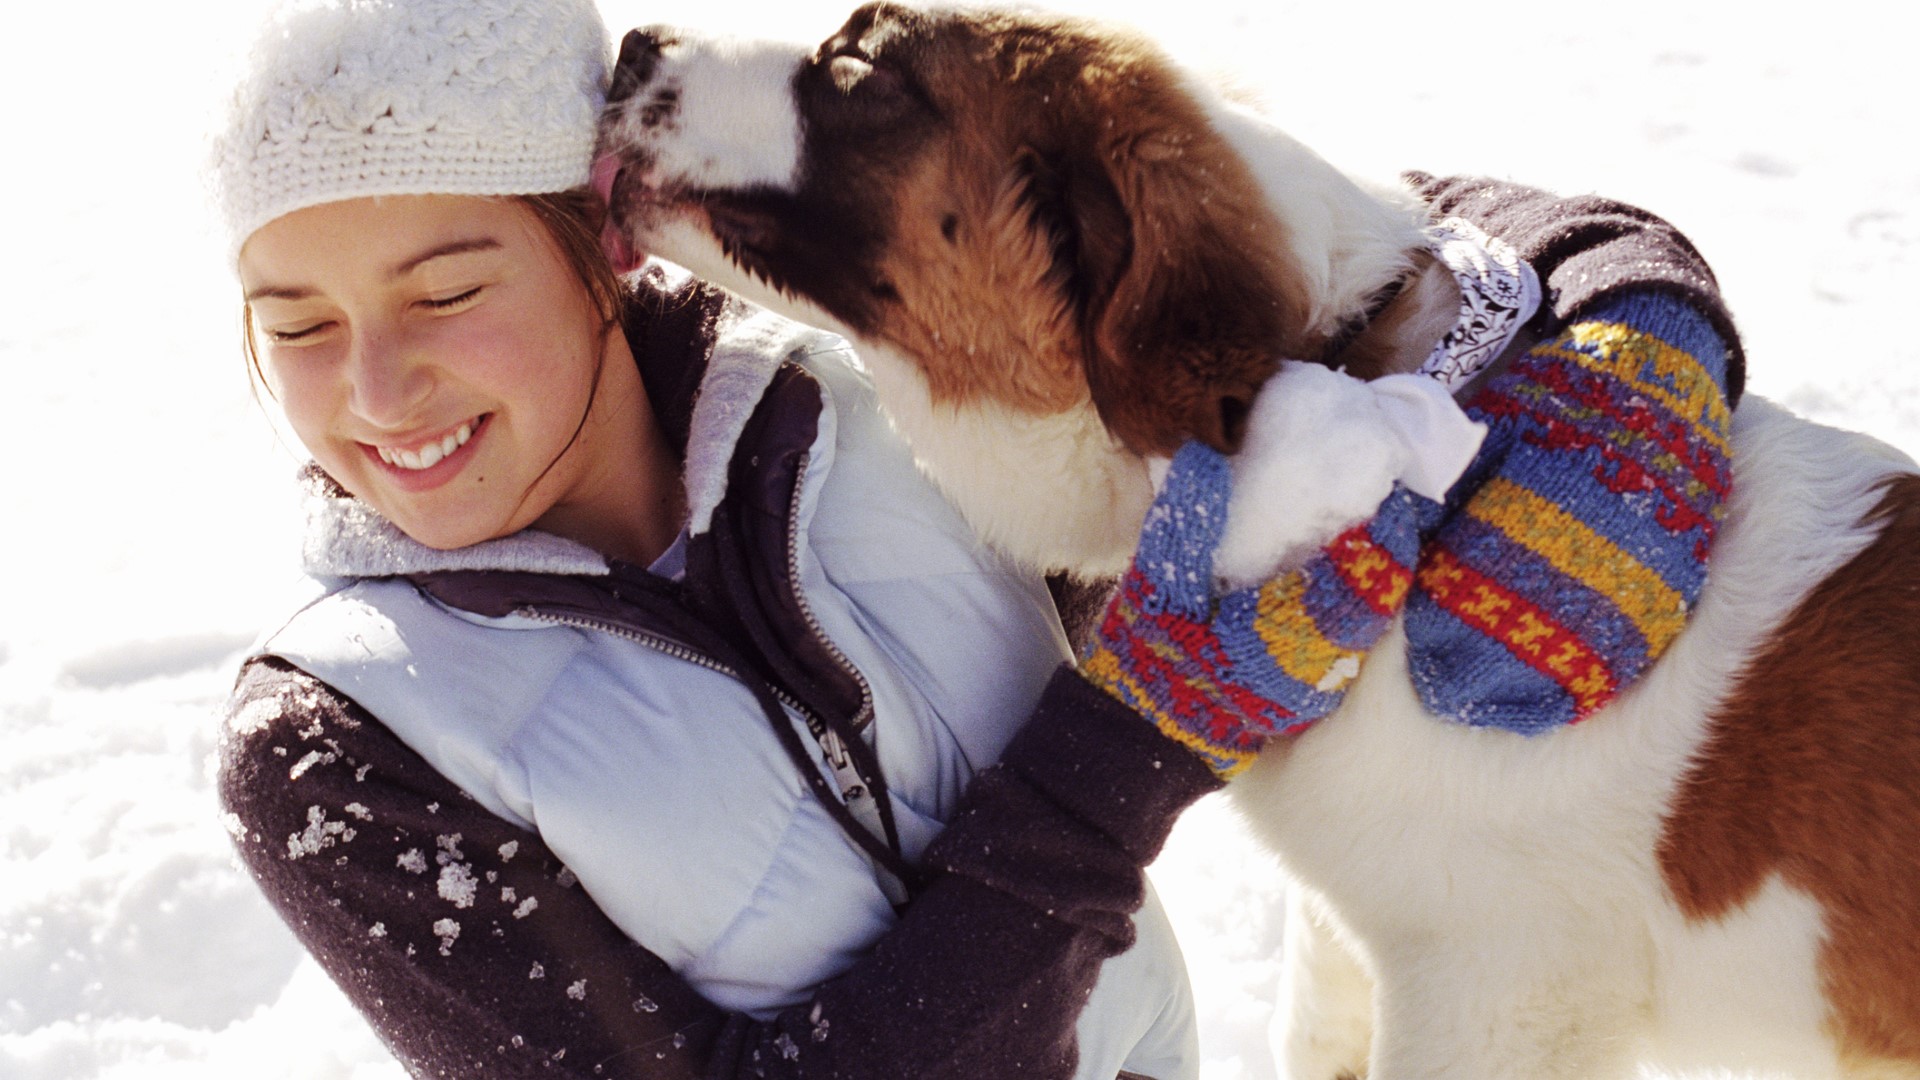 A Saint Bernard licks a smiling person on a snowy day